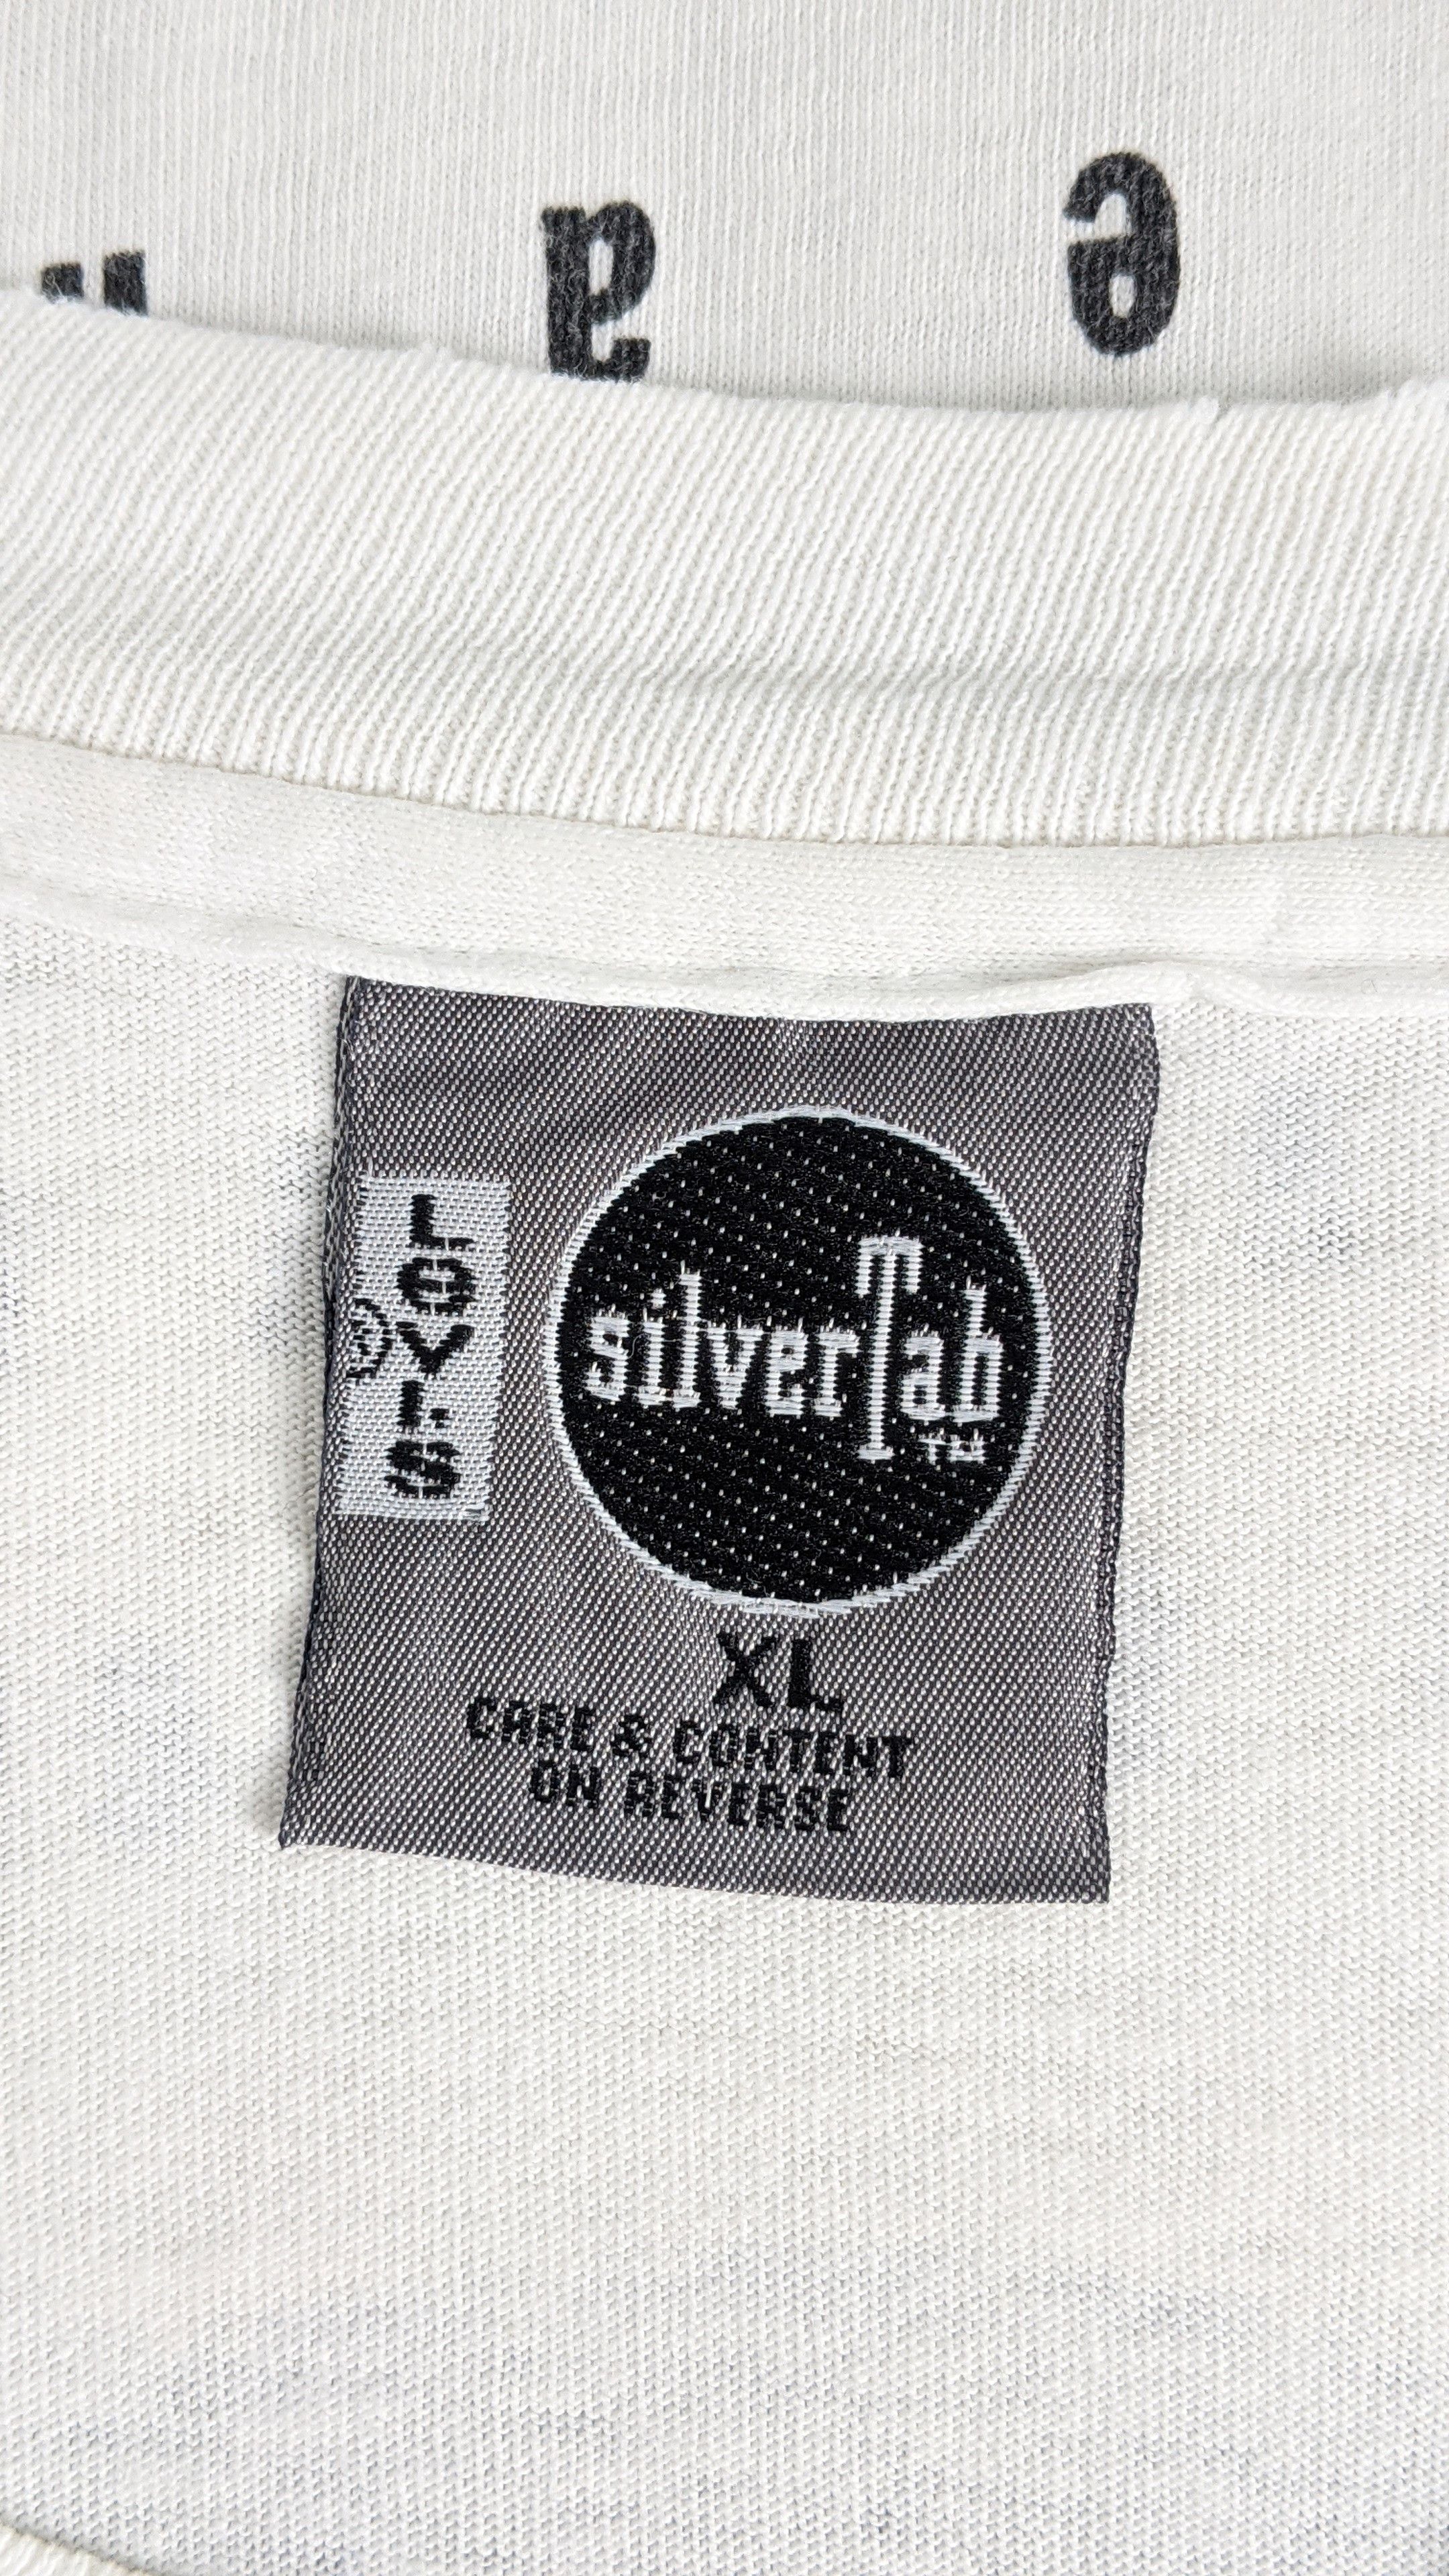 Vintage Levi's Silvertab All Over print shirt - 4